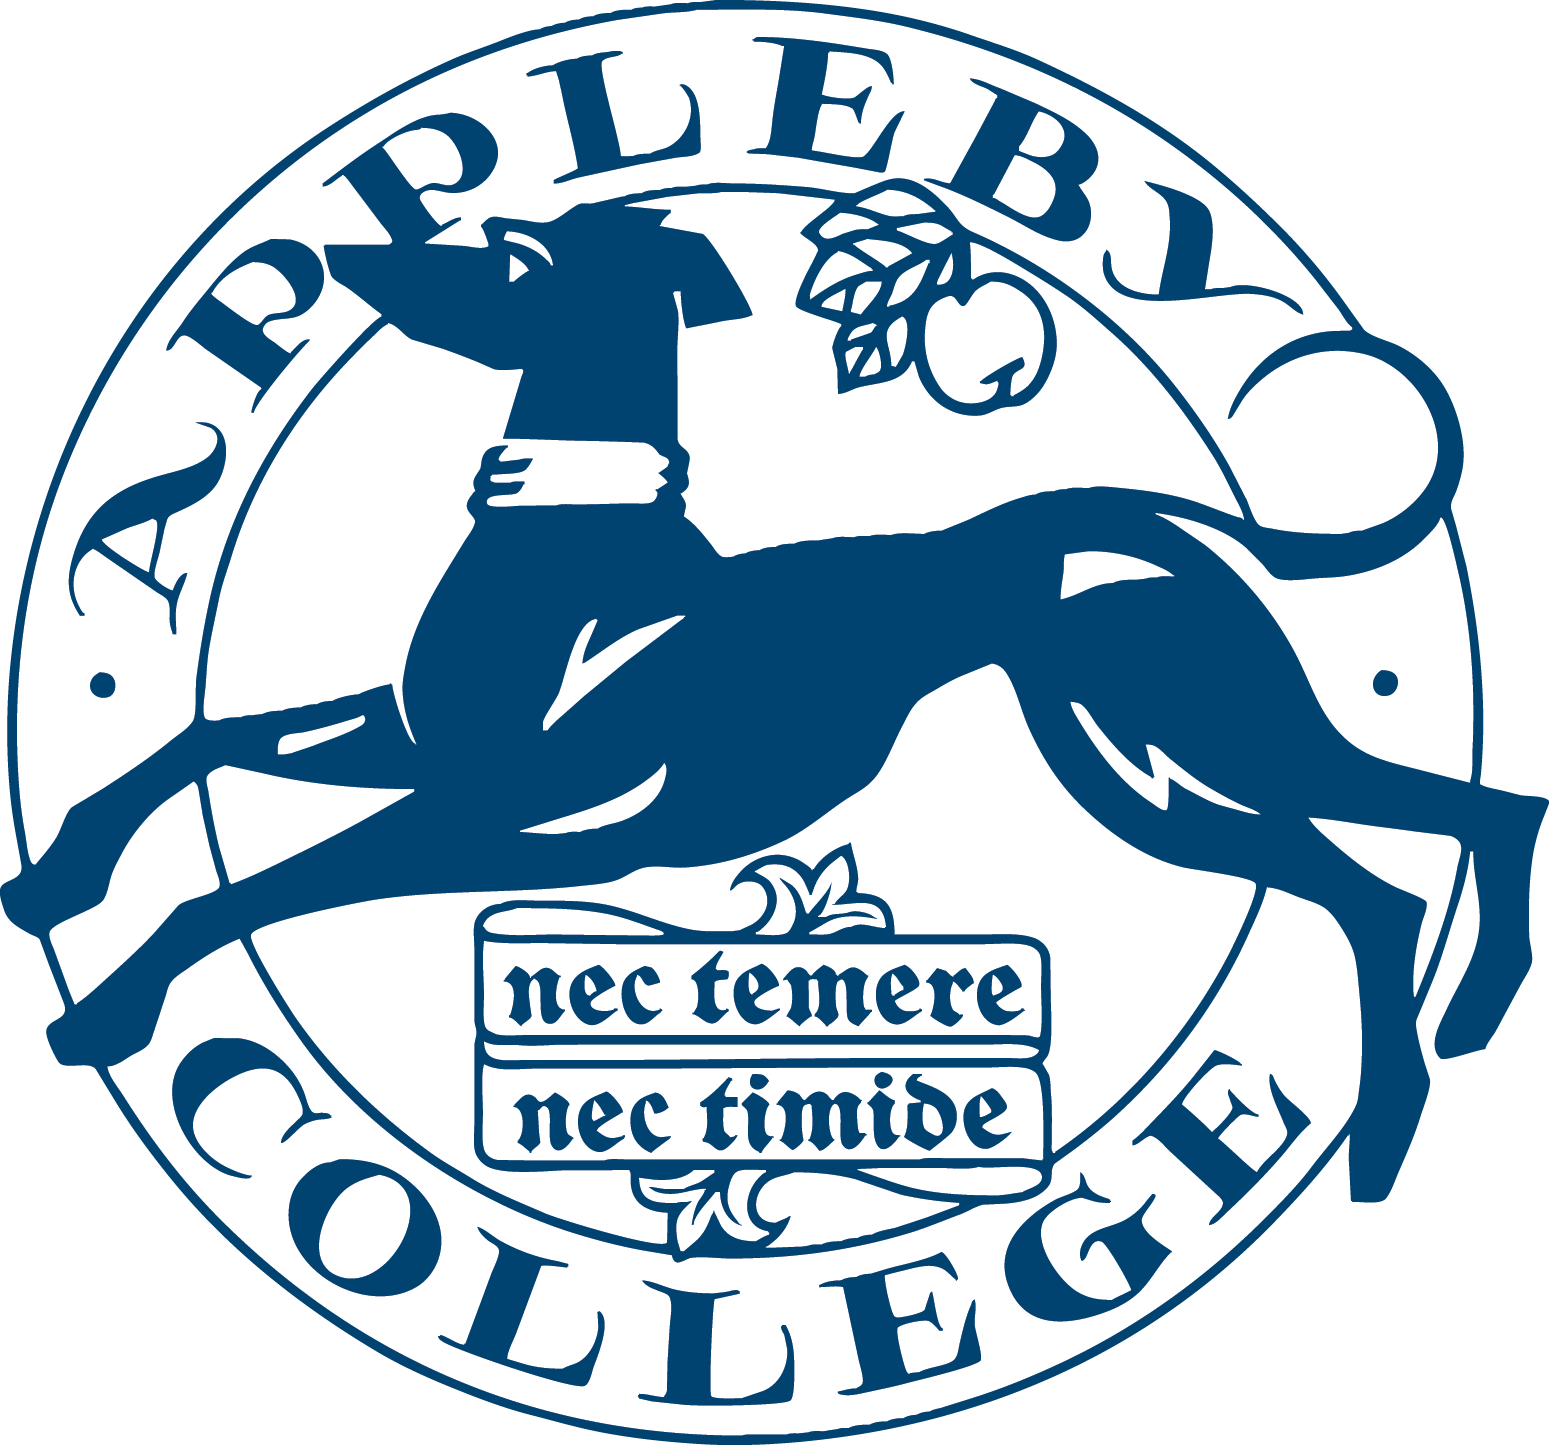 Appleby College Logo